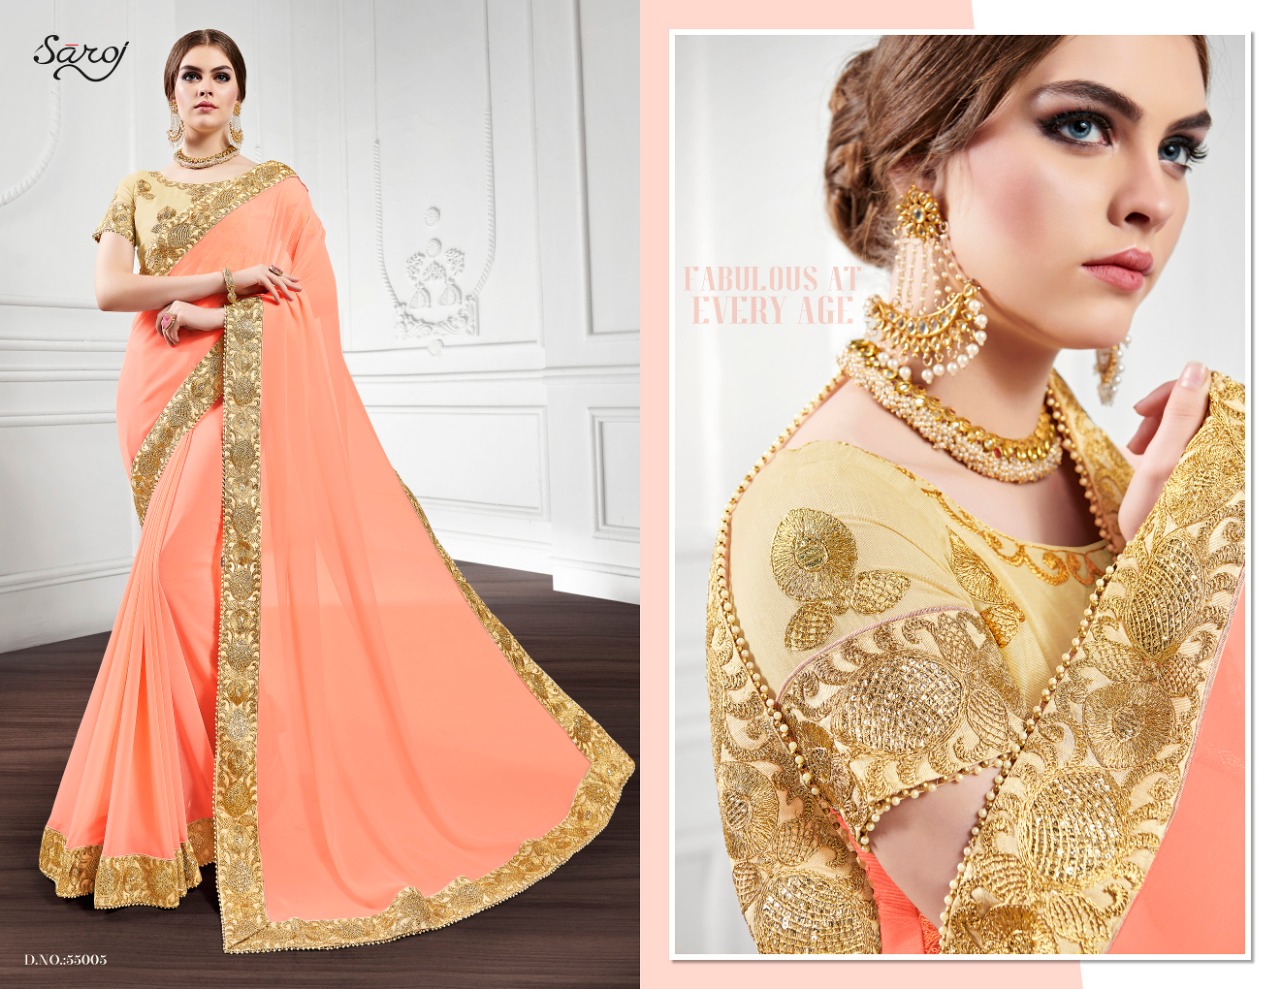 Saroj Saree Indian Fashion 55005